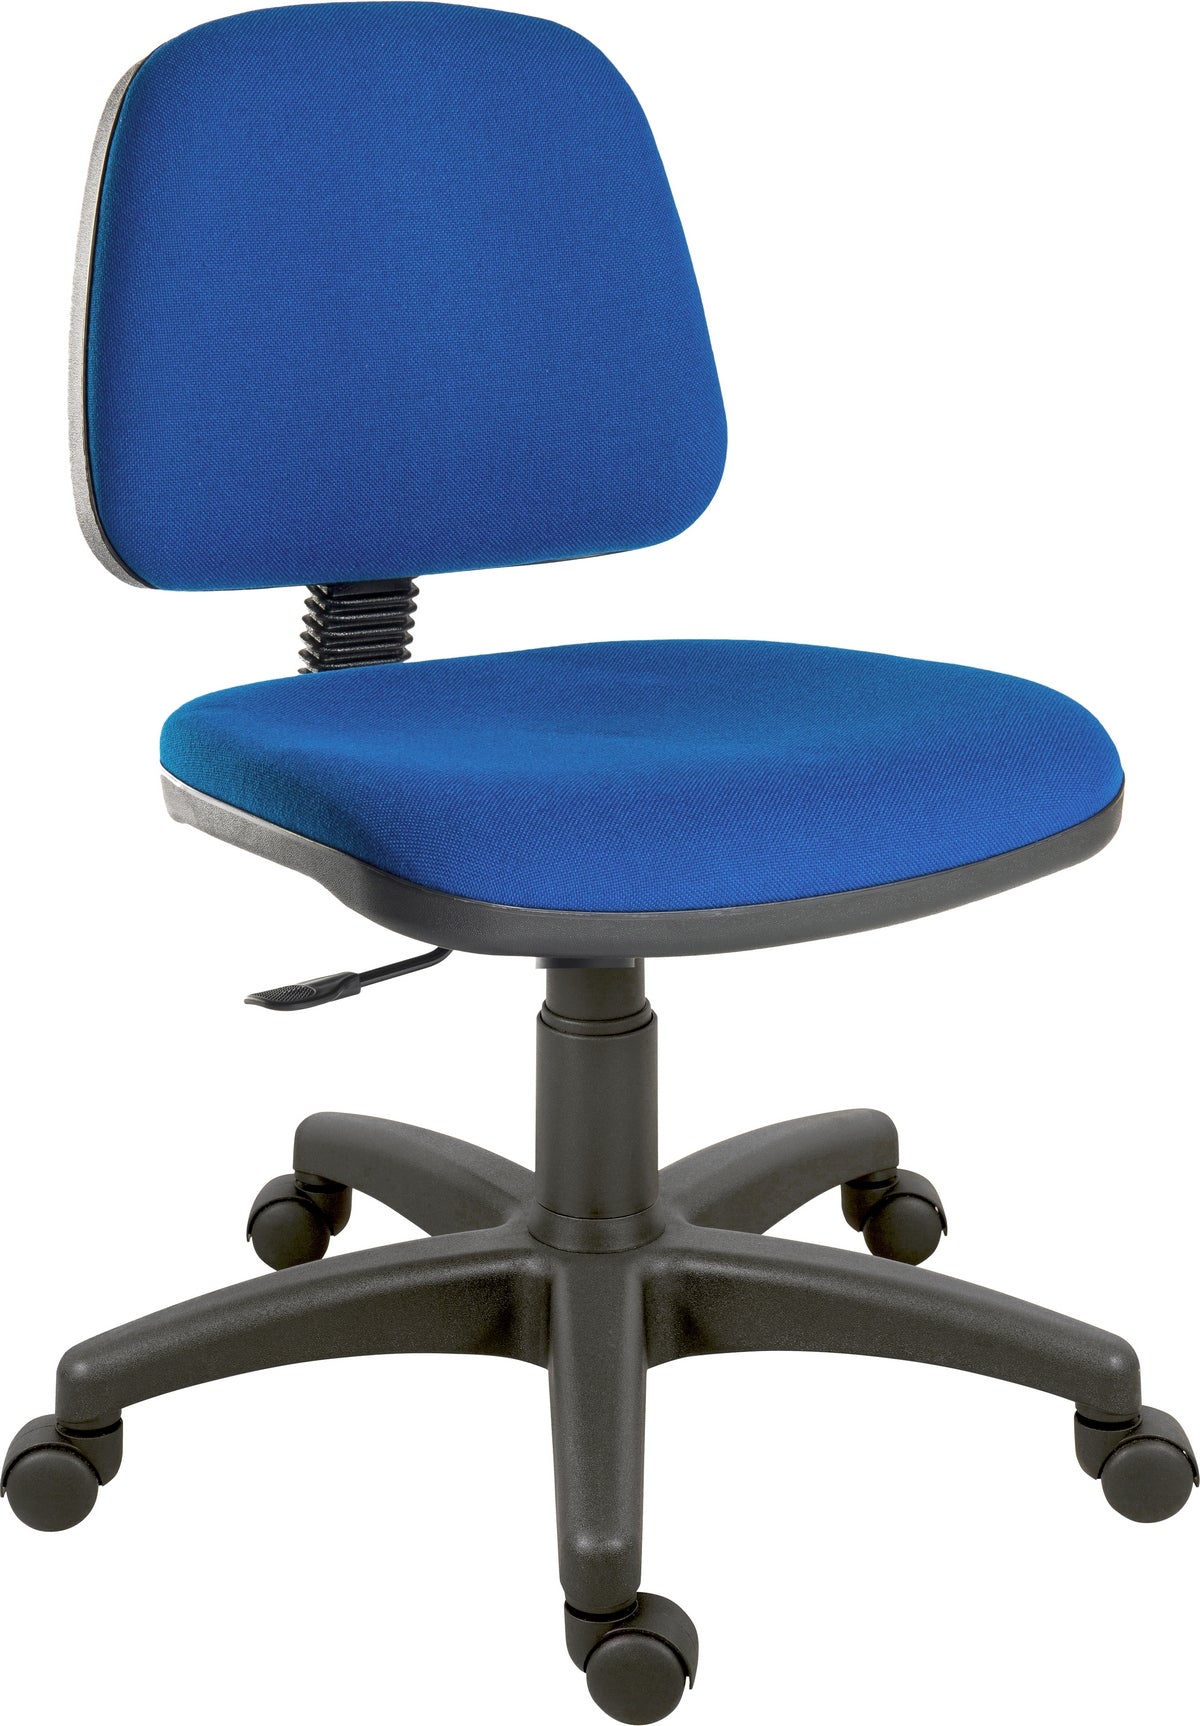 Medium Back Fabric Typist Chair - Blue or Black Option - ERGO-BLASTER